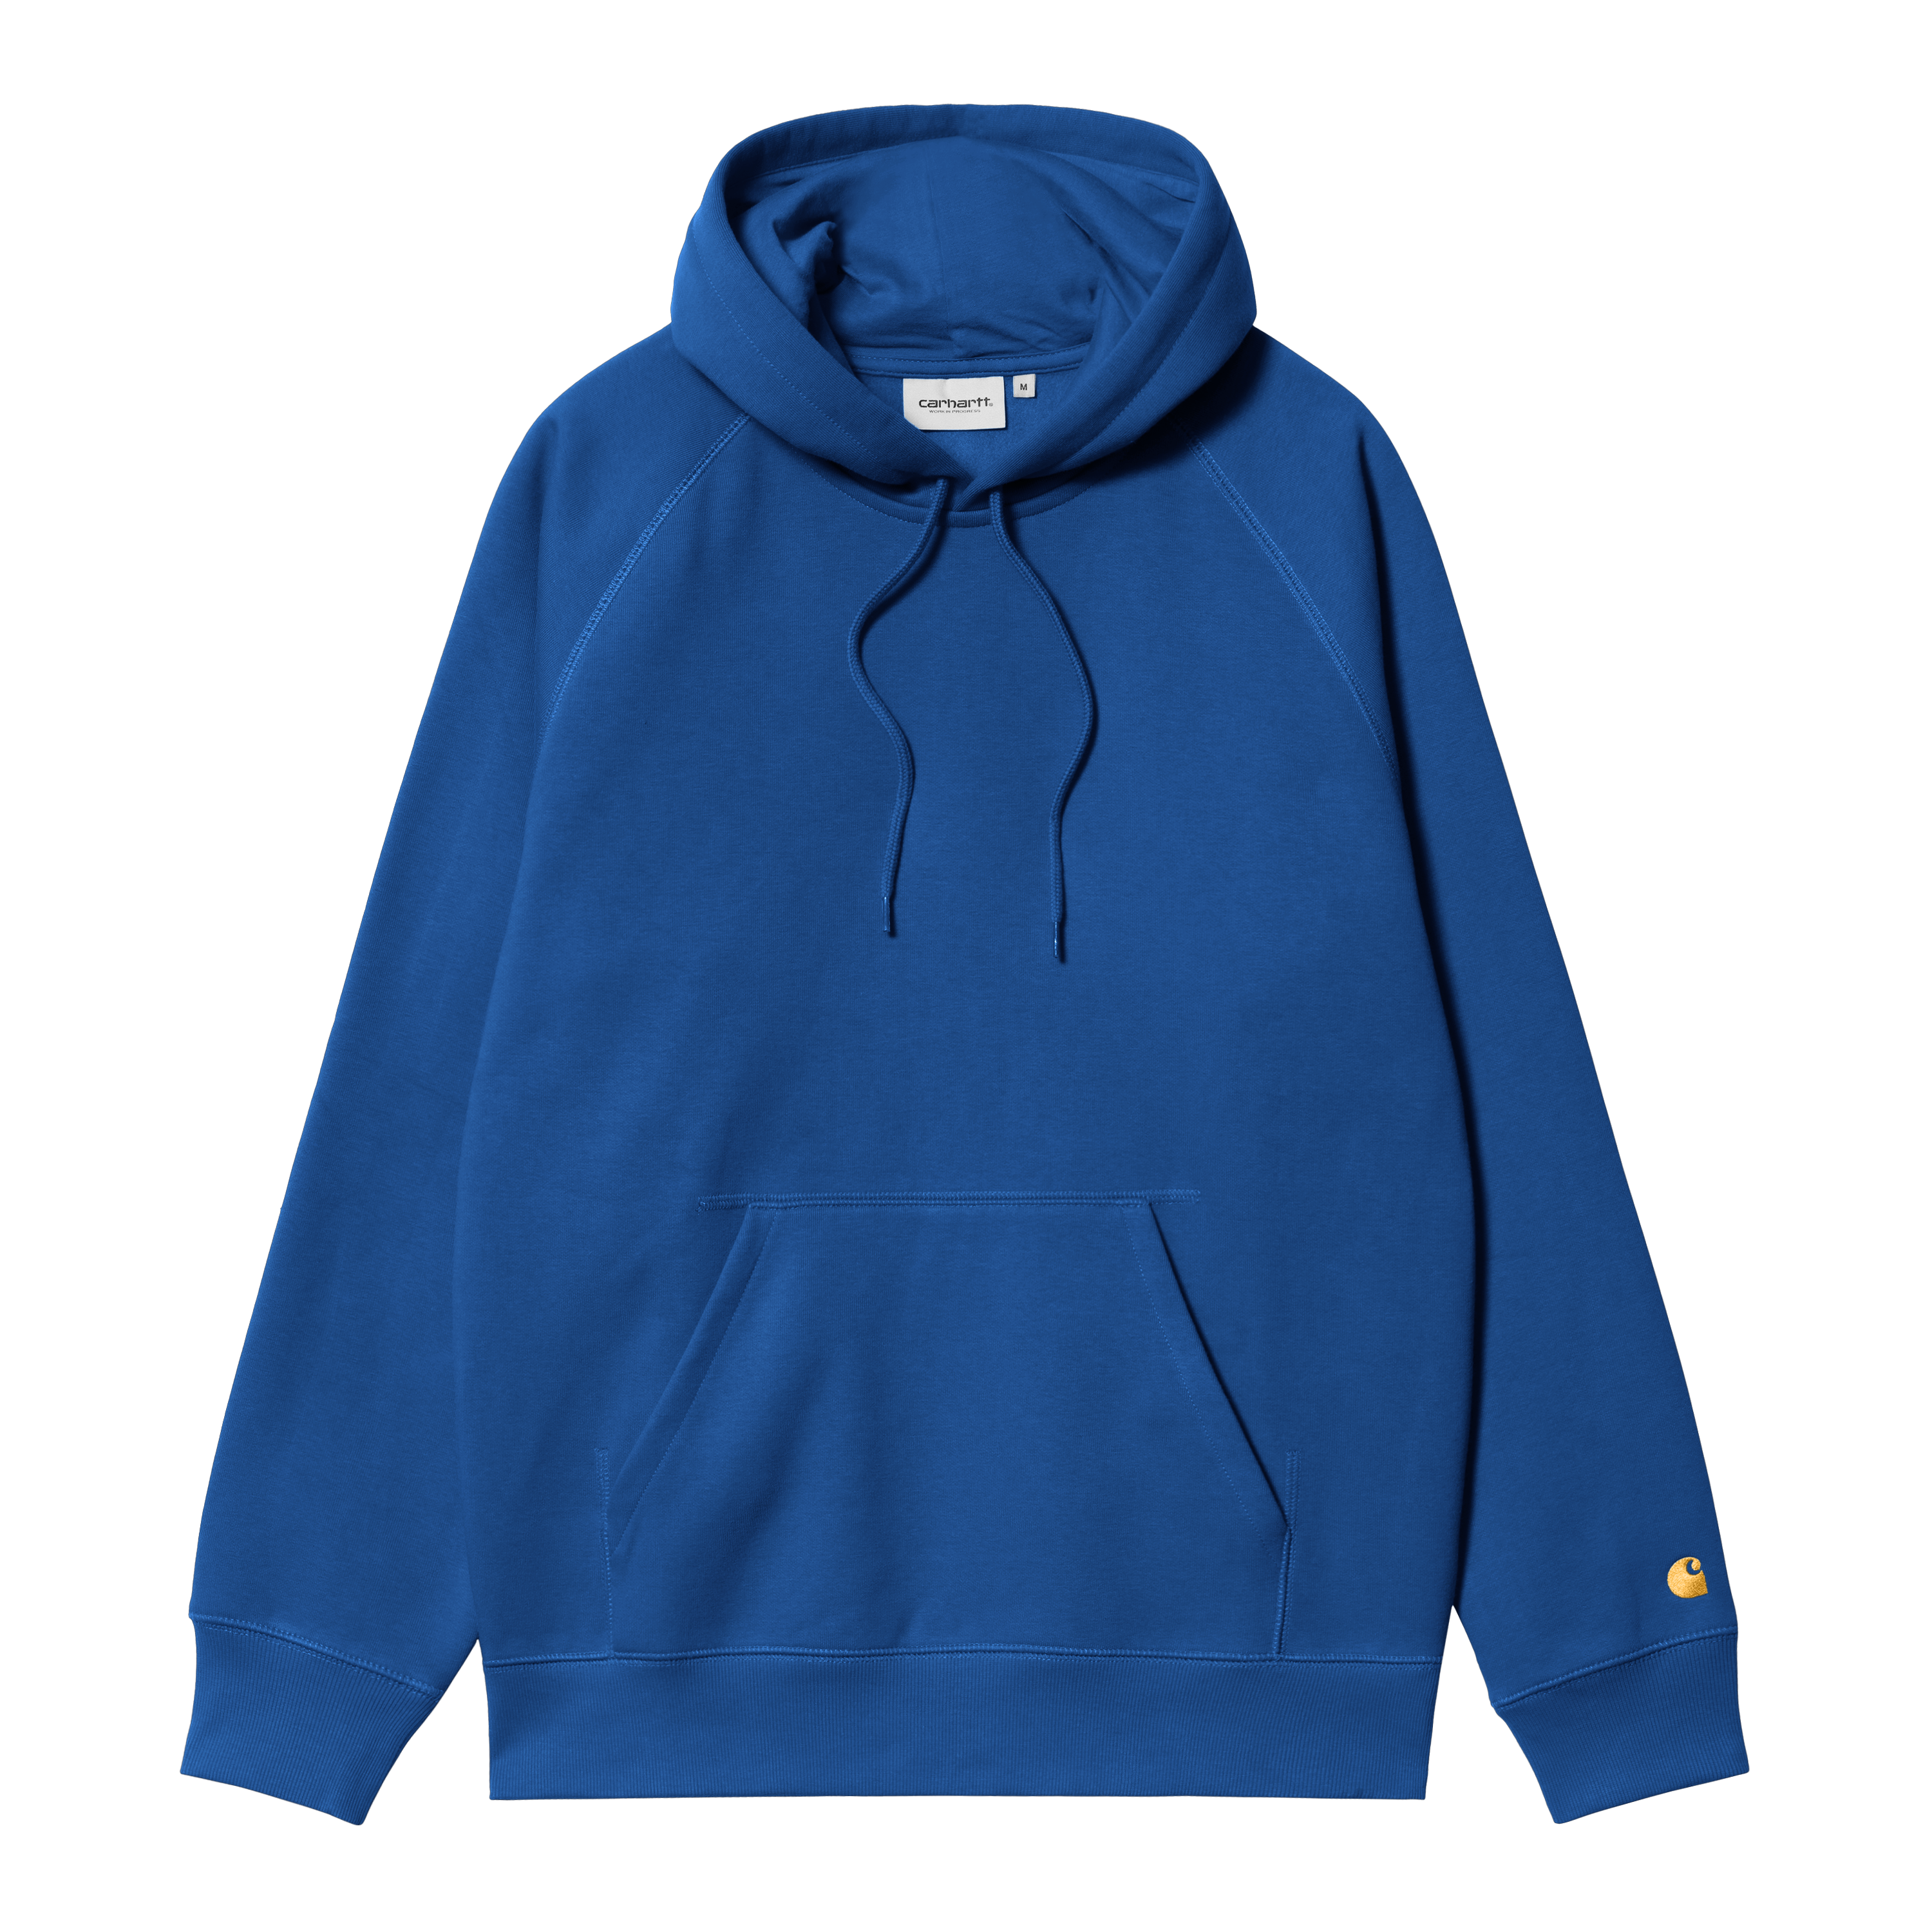 Carhartt WIP Hooded Chase Sweatshirt in Blu